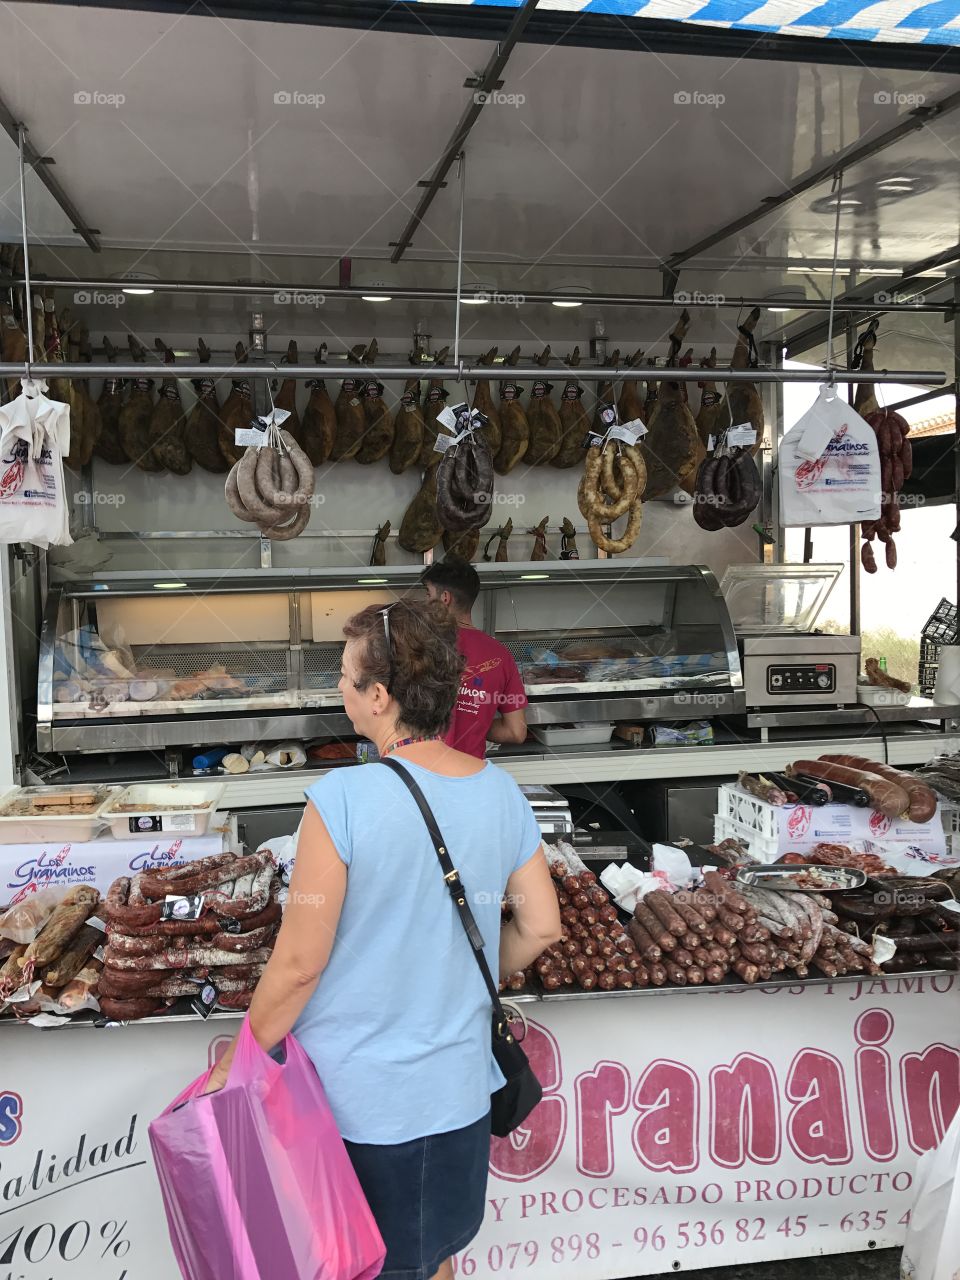 Sausage market in Spain 